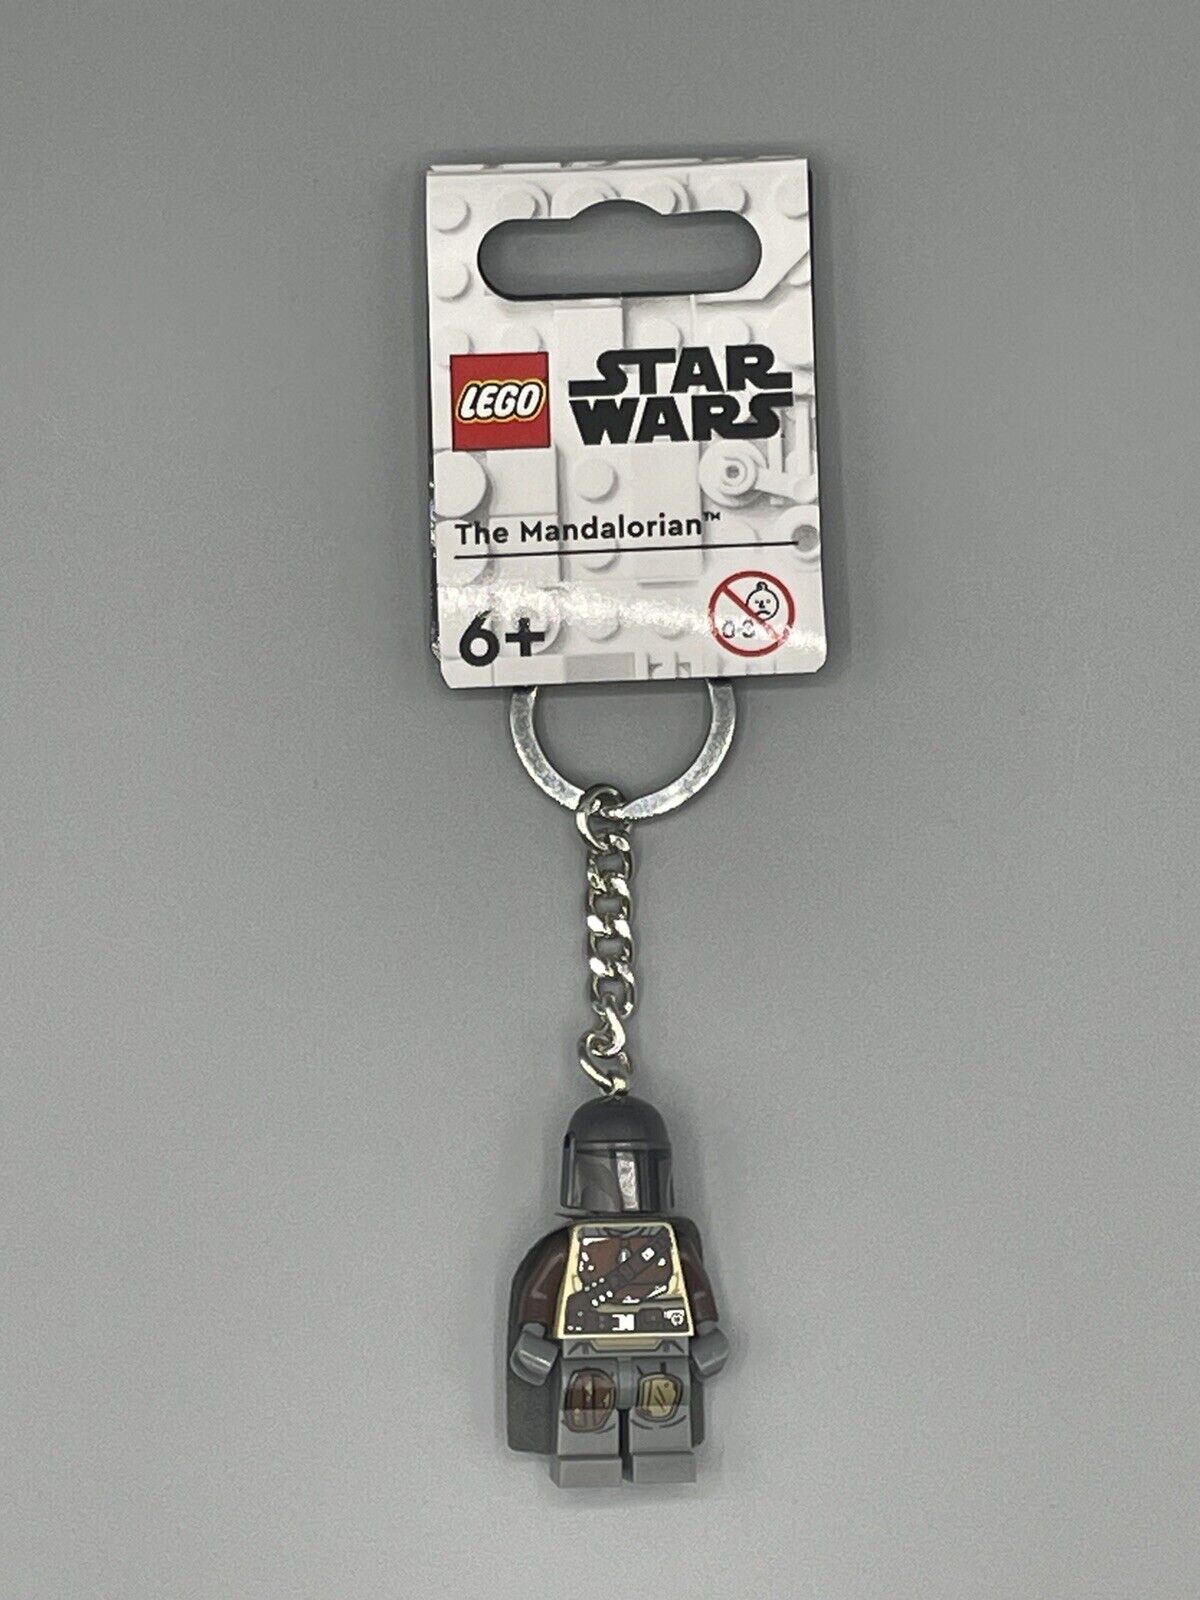 LEGO Star Wars THE MANDALORIAN Minifigure Keyring Keychain 854124/6337416 NEW!!